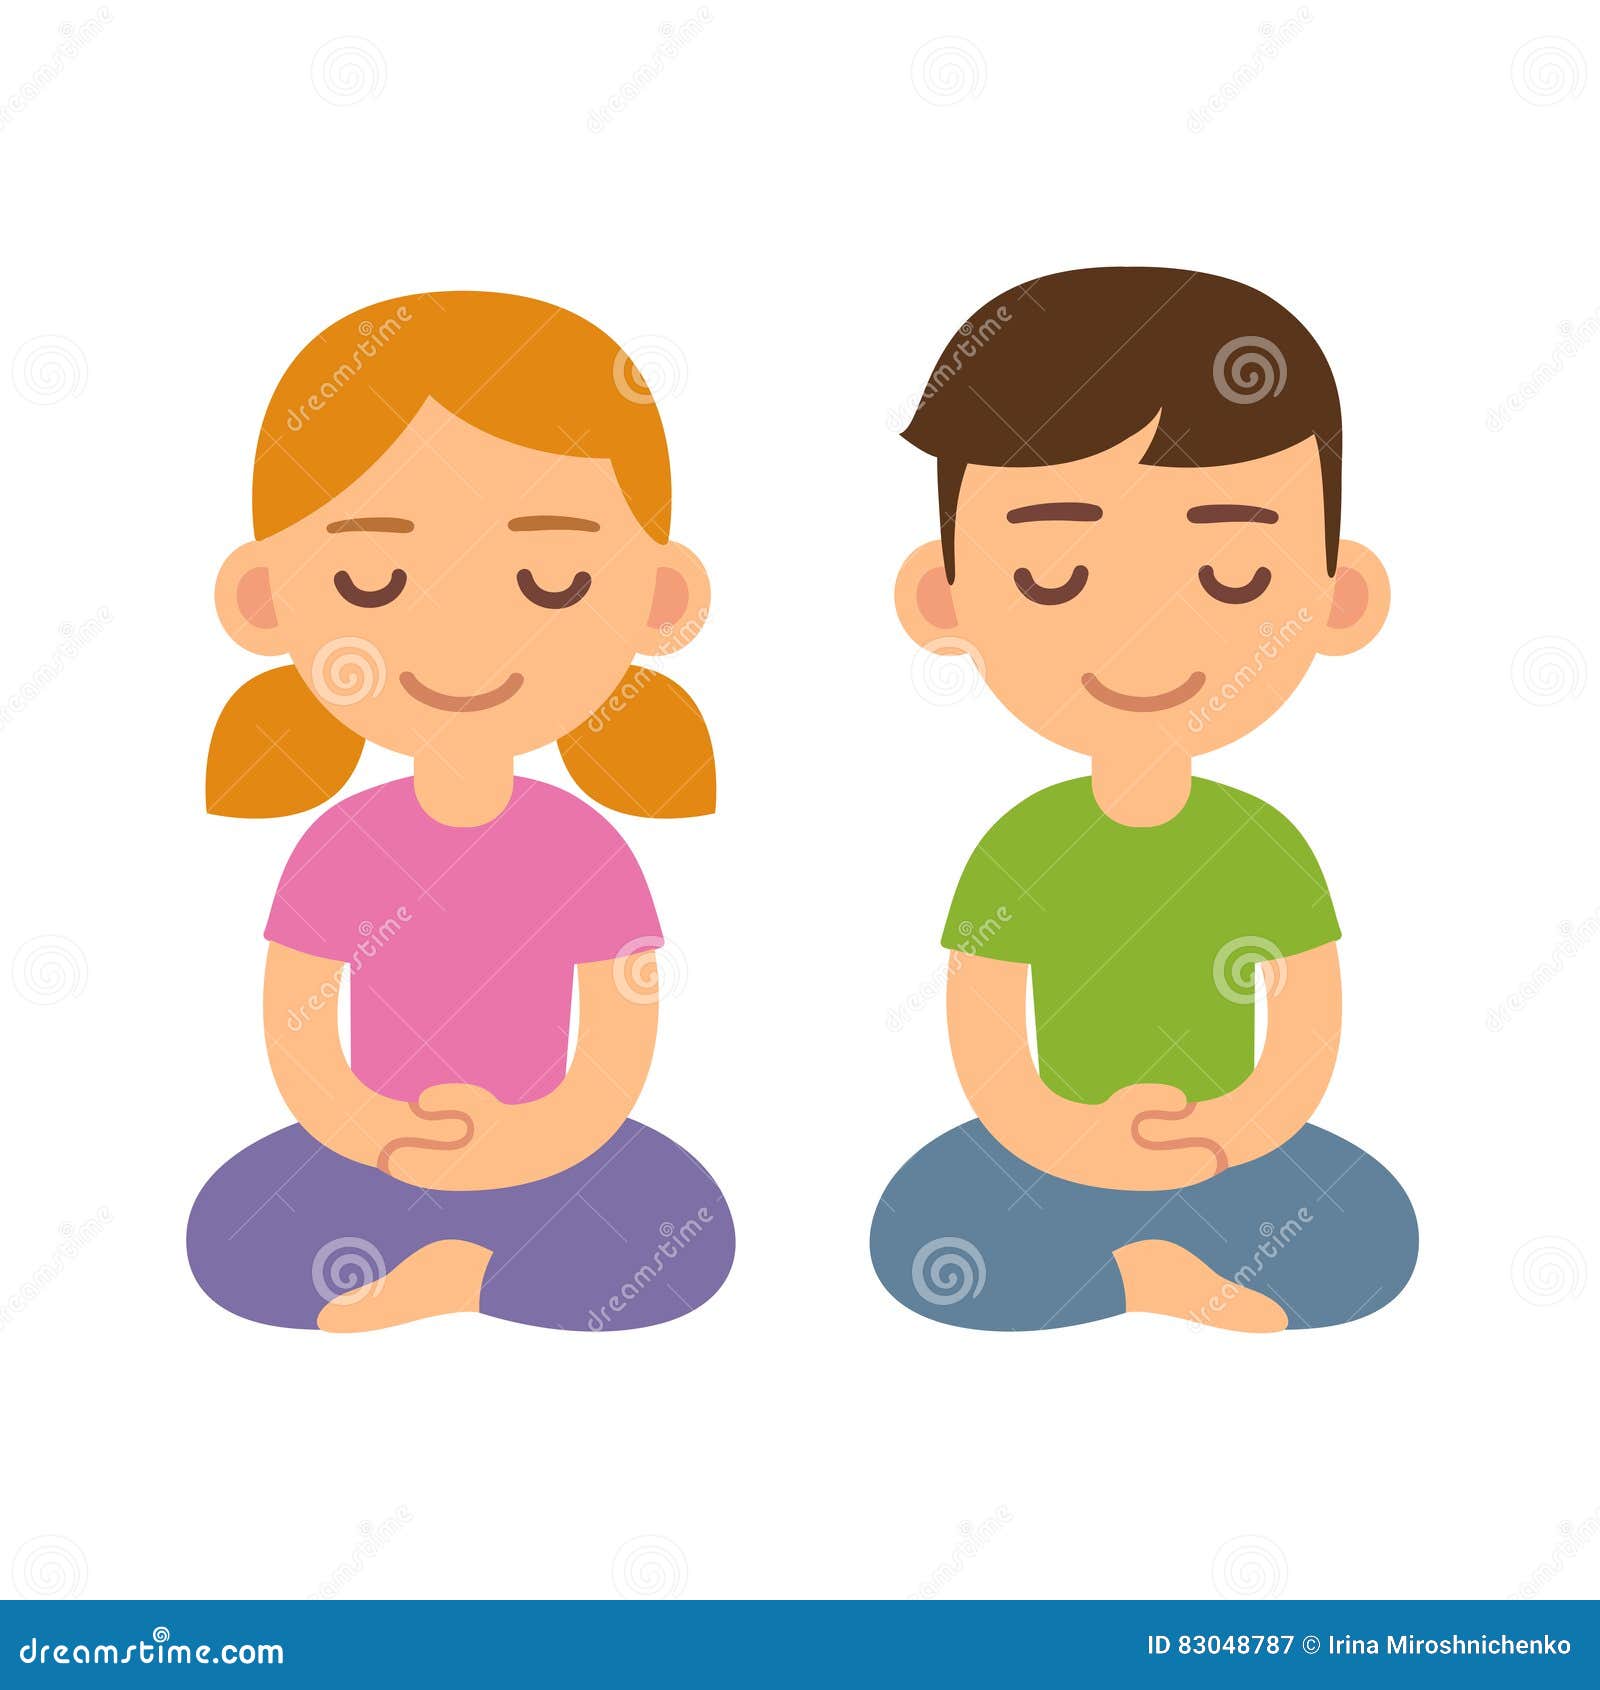 cartoon meditating children